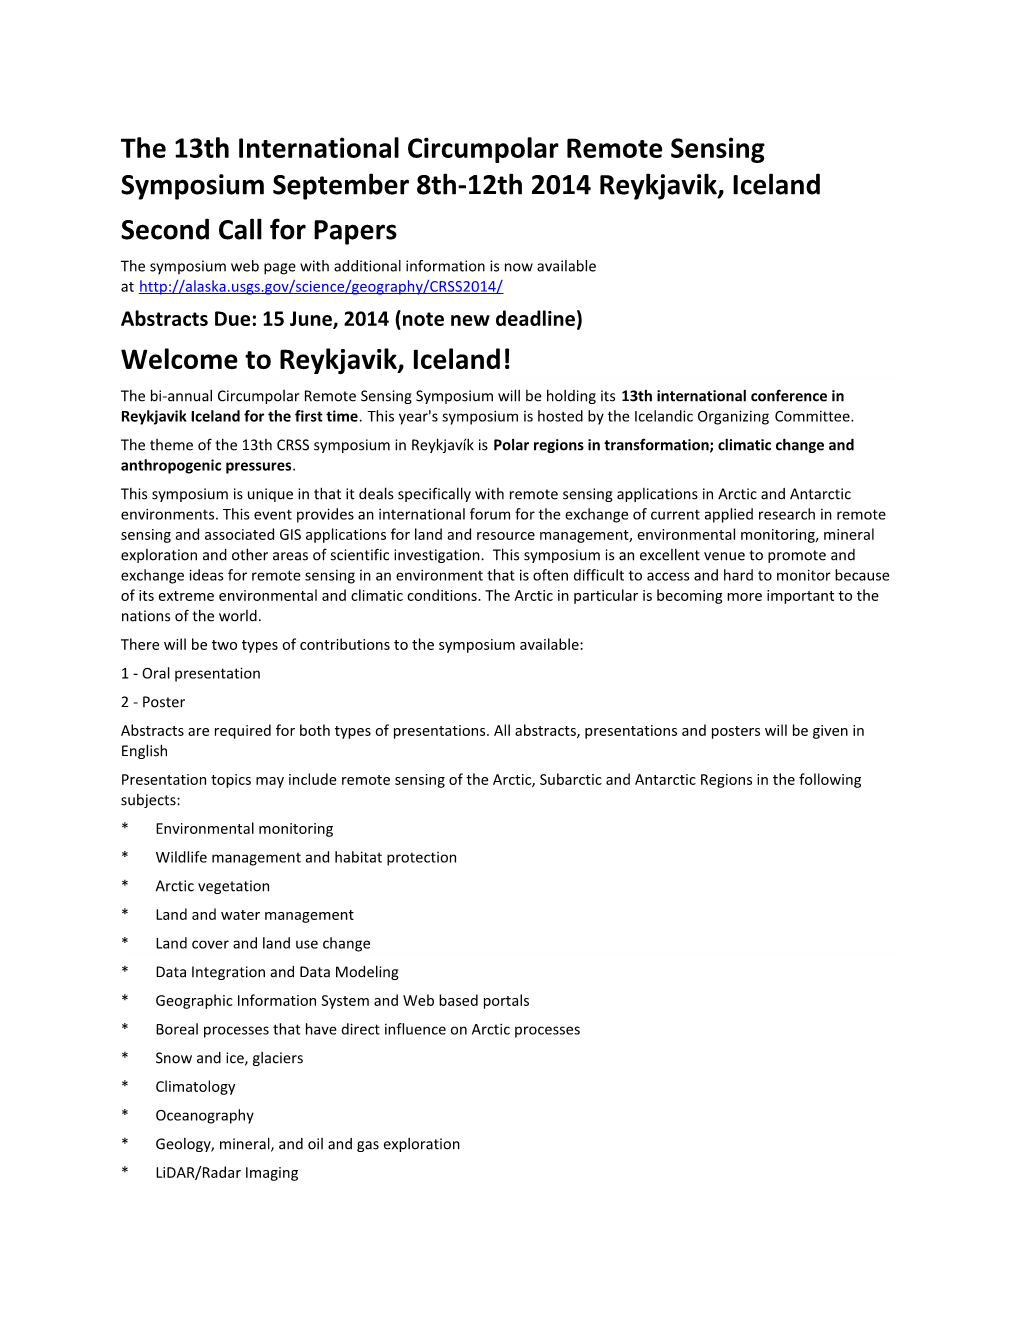 The 13Th International Circumpolar Remote Sensing Symposiumseptember 8Th-12Th 2014Reykjavik